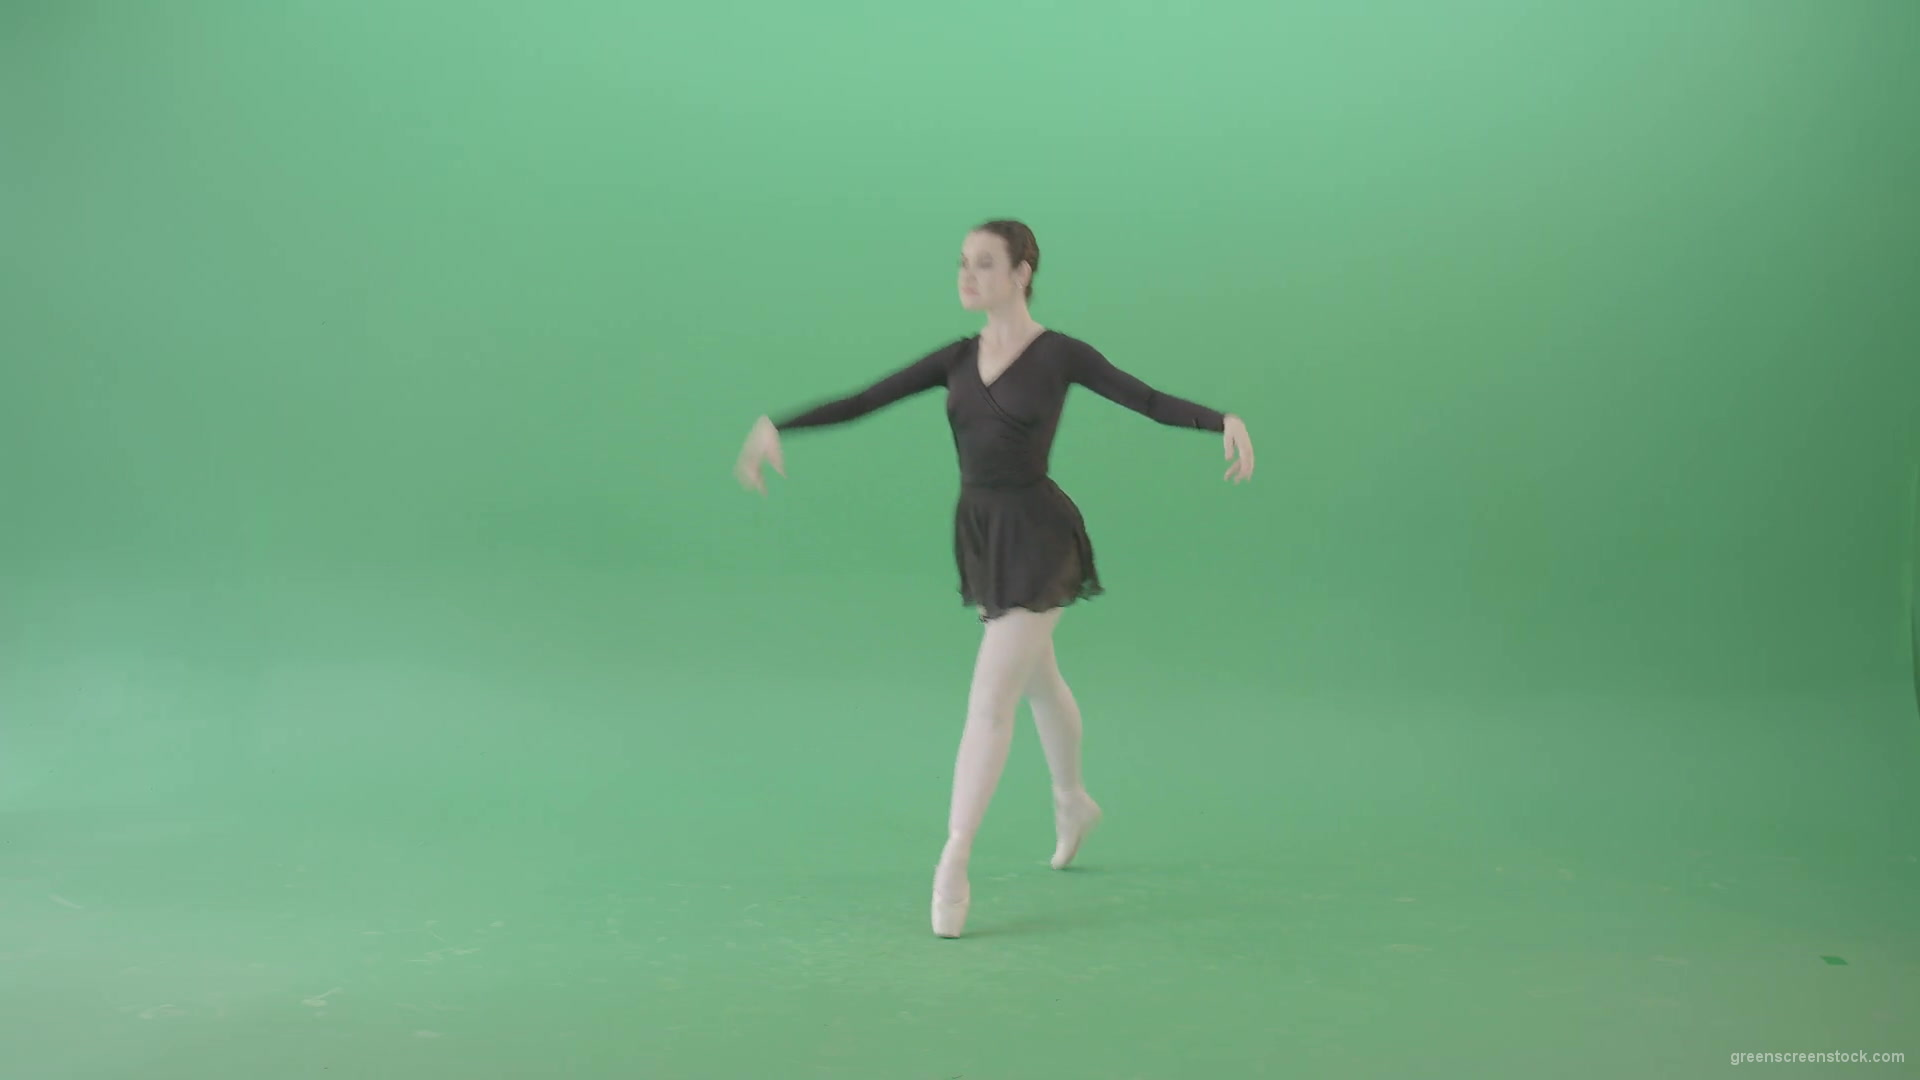 Russian-ballet-dancing-girl-in-black-body-wear-dress-dancing-isolated-on-green-screen-4K-Video-Footage-1920_005 Green Screen Stock